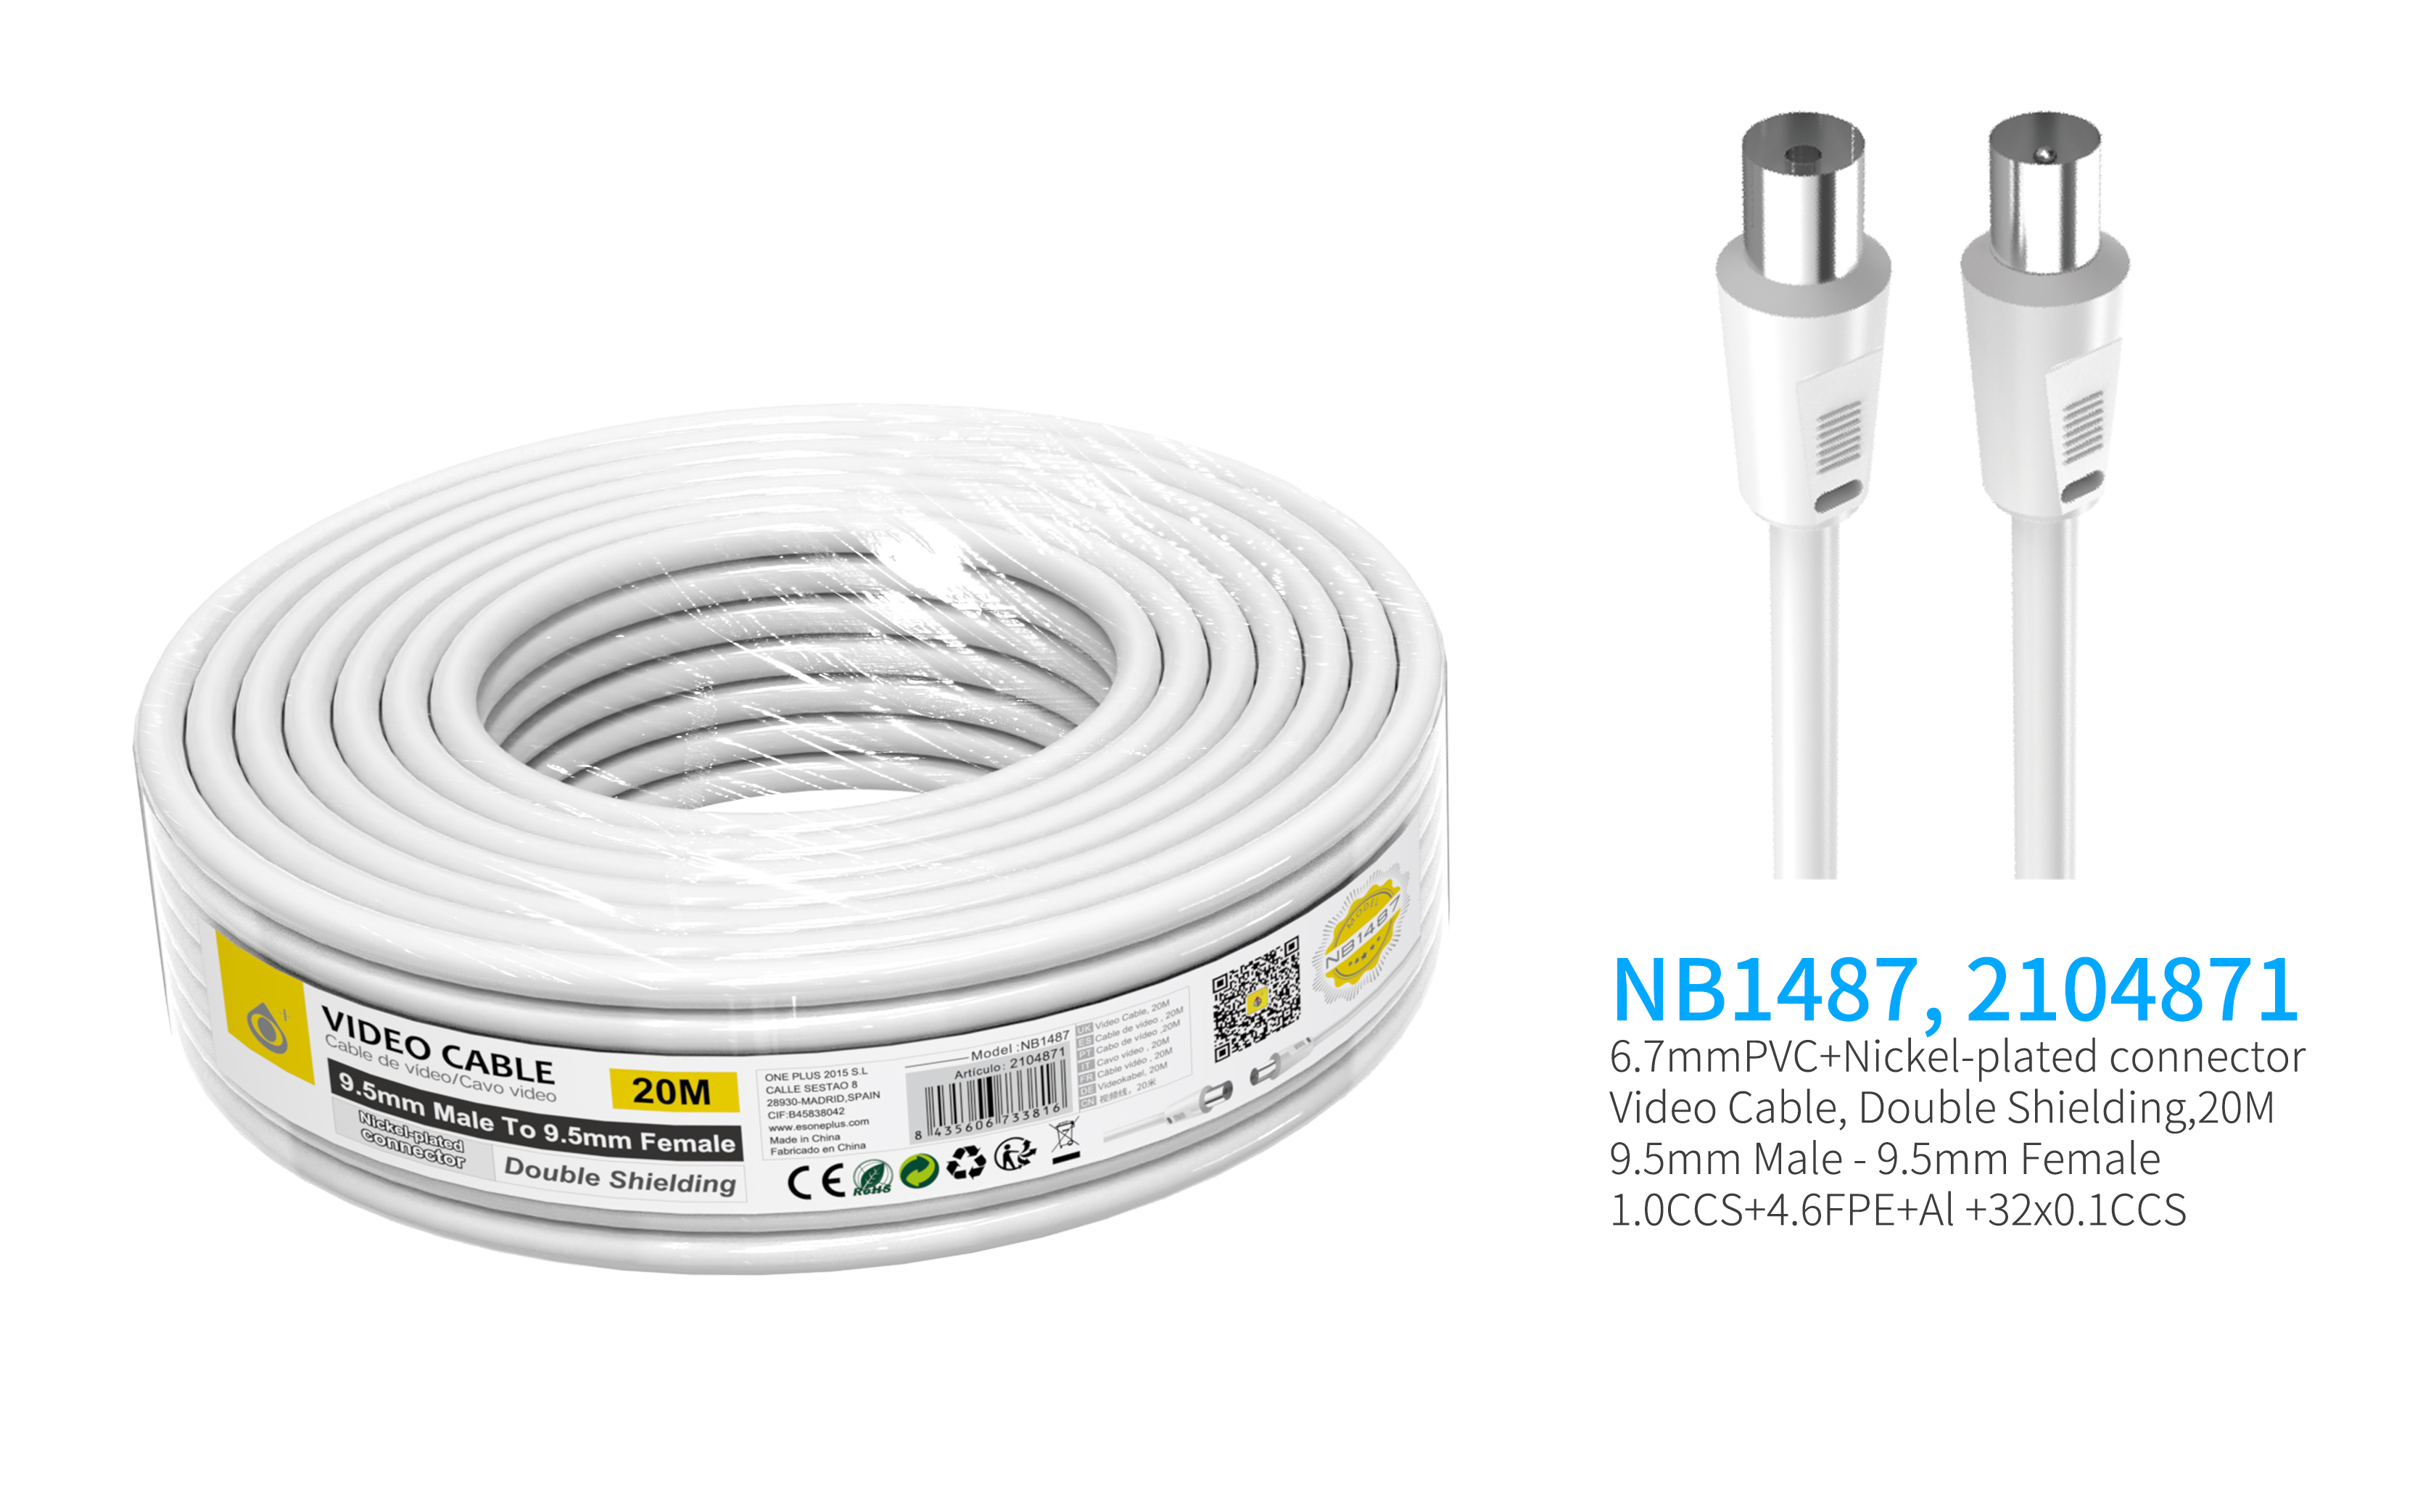 NB1487  Cable de Video(Coaxial) Conector banado en niquel 9.5mm  Macho a Hembra, doble blindaje, 20